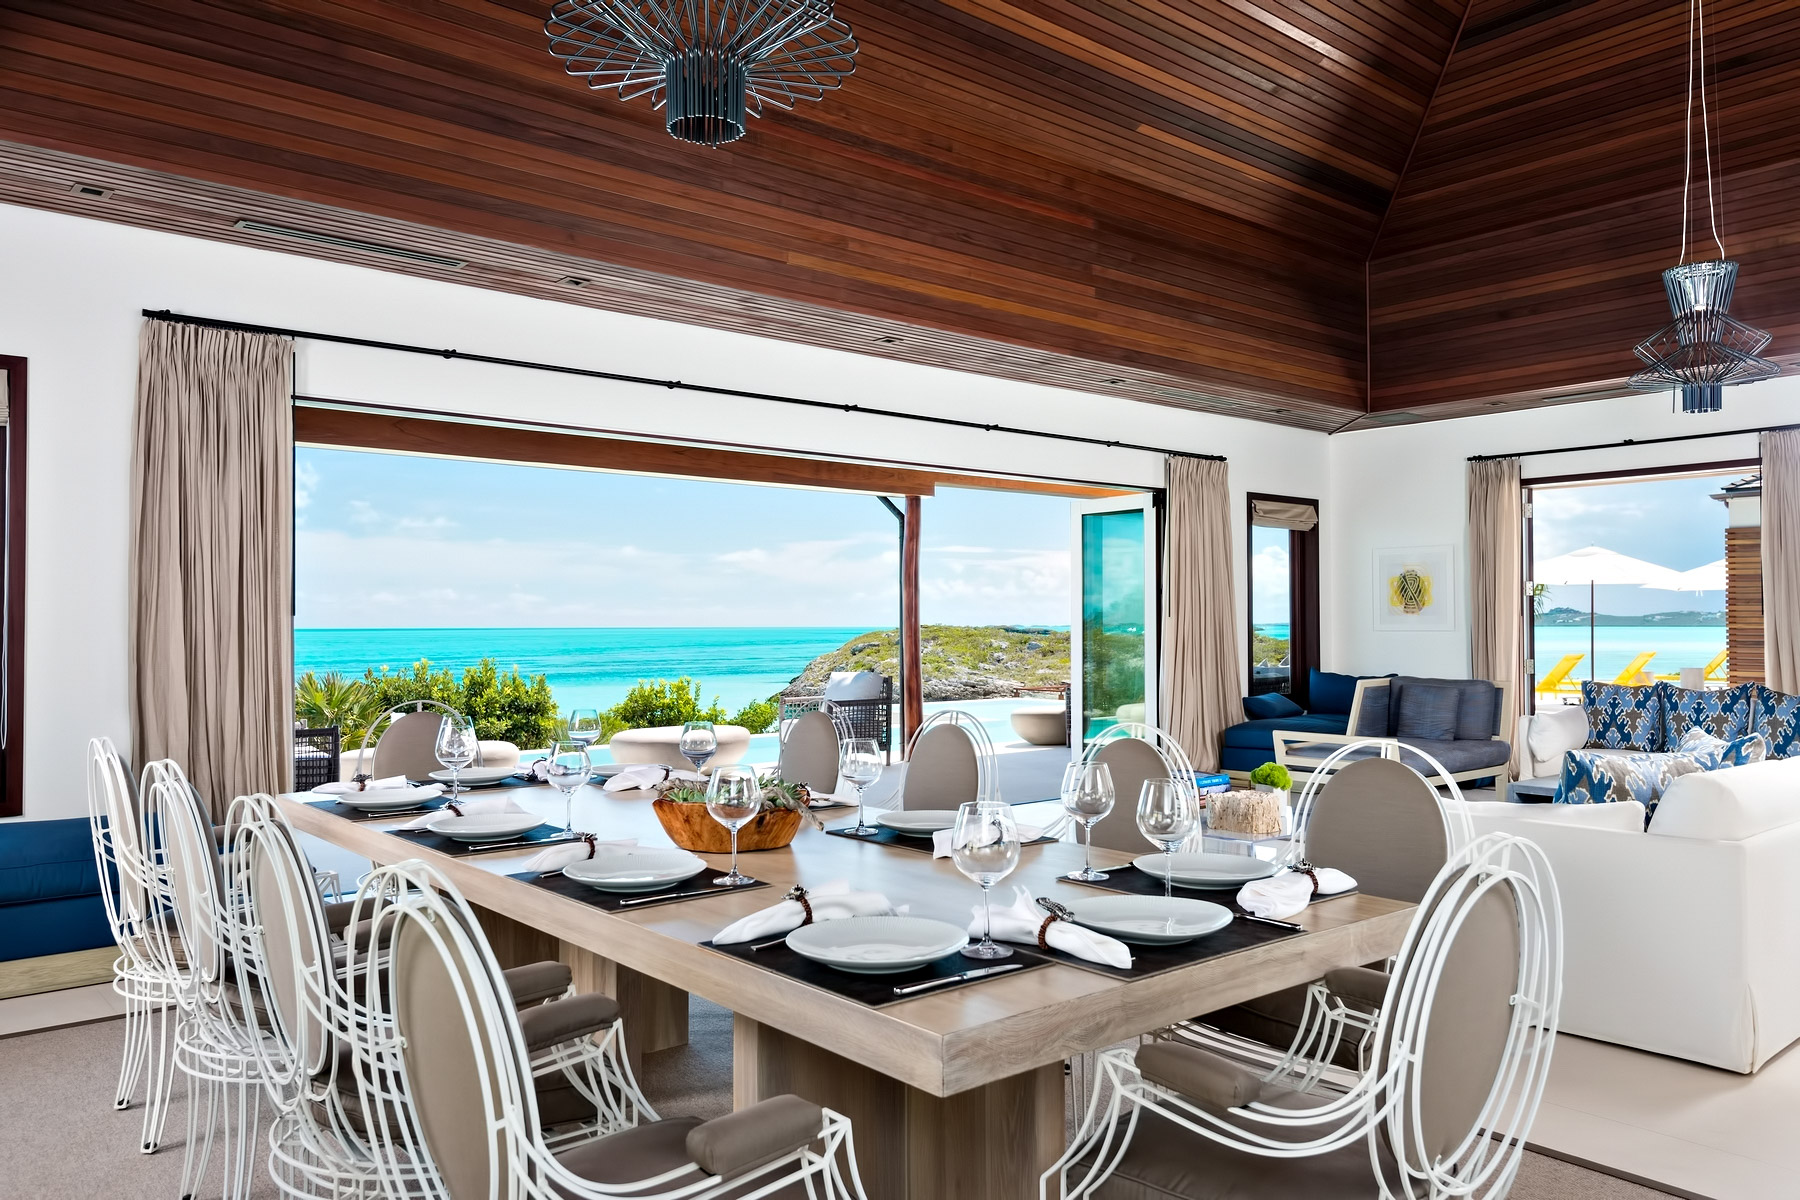 Turtle Tail Luxury Estate Villa - Providenciales, Turks and Caicos Islands